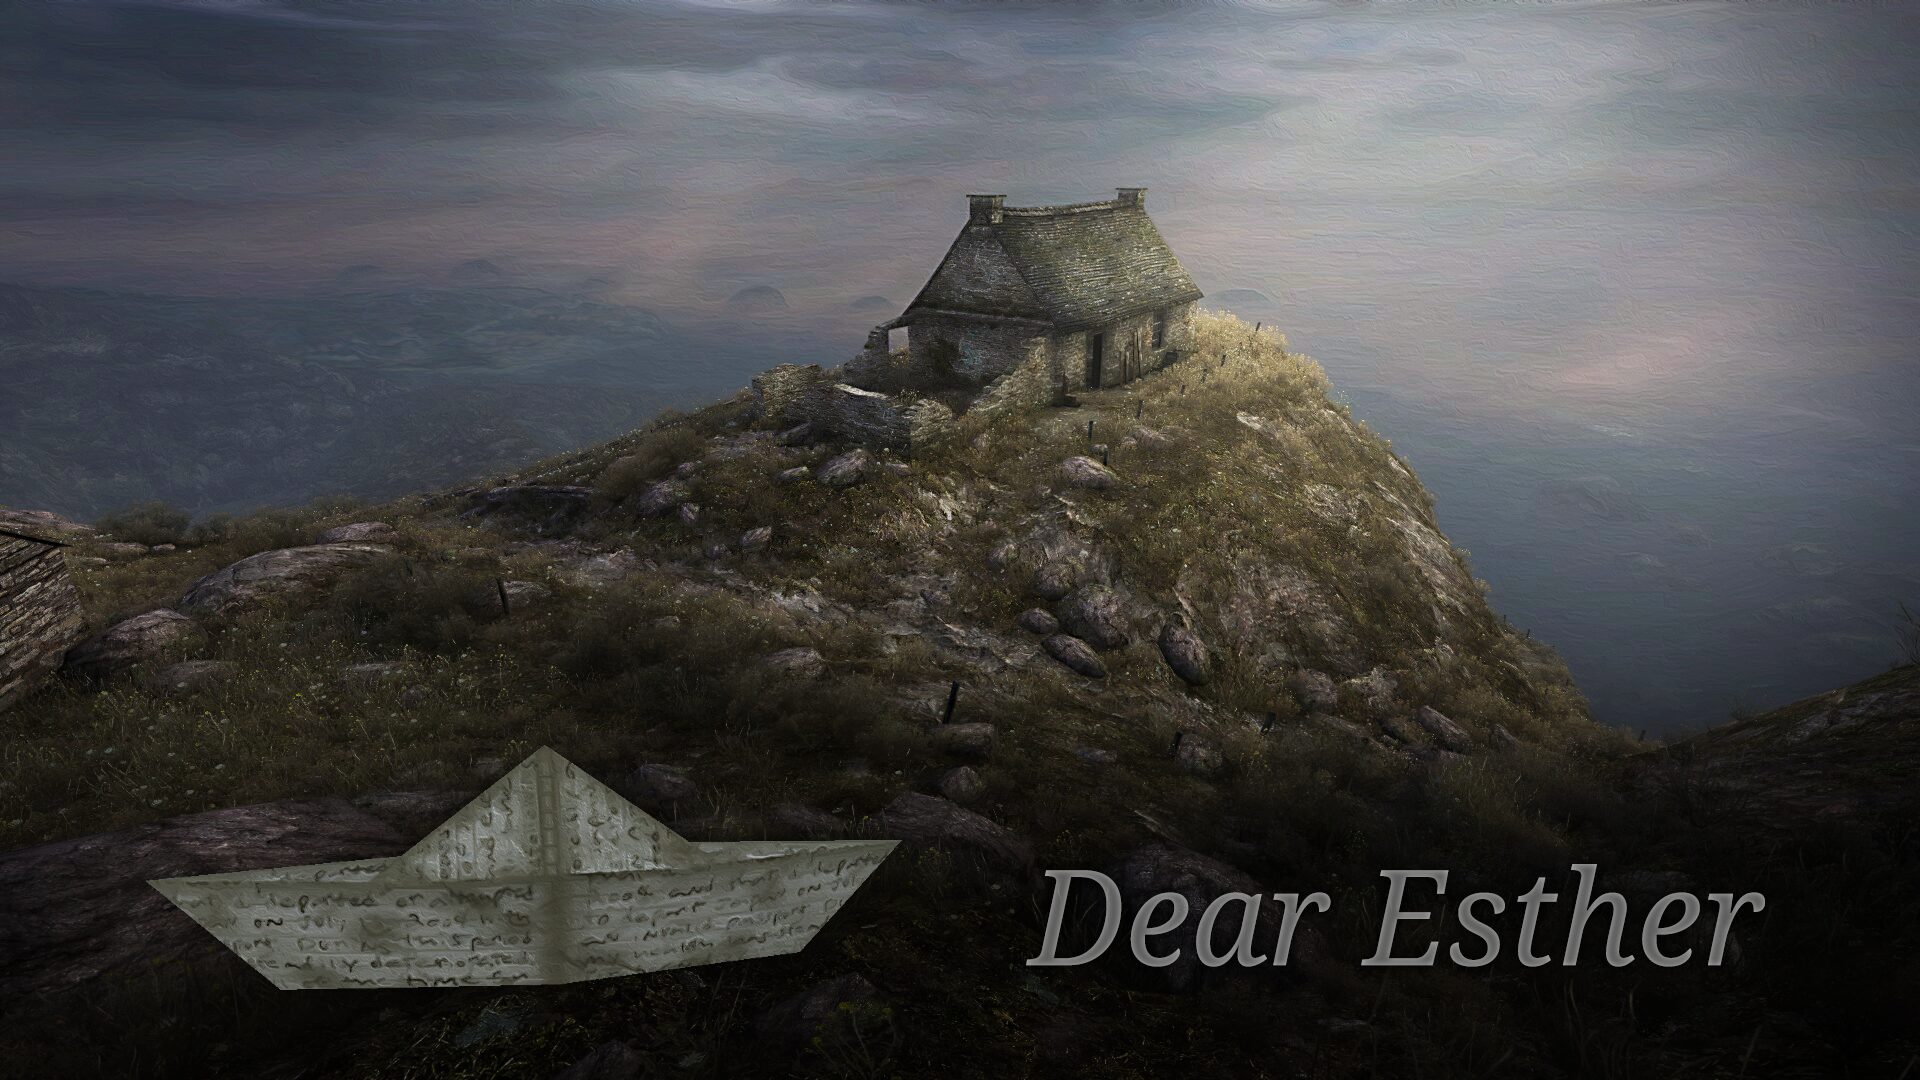 Dear Esther: Landmark Edition free on Steam